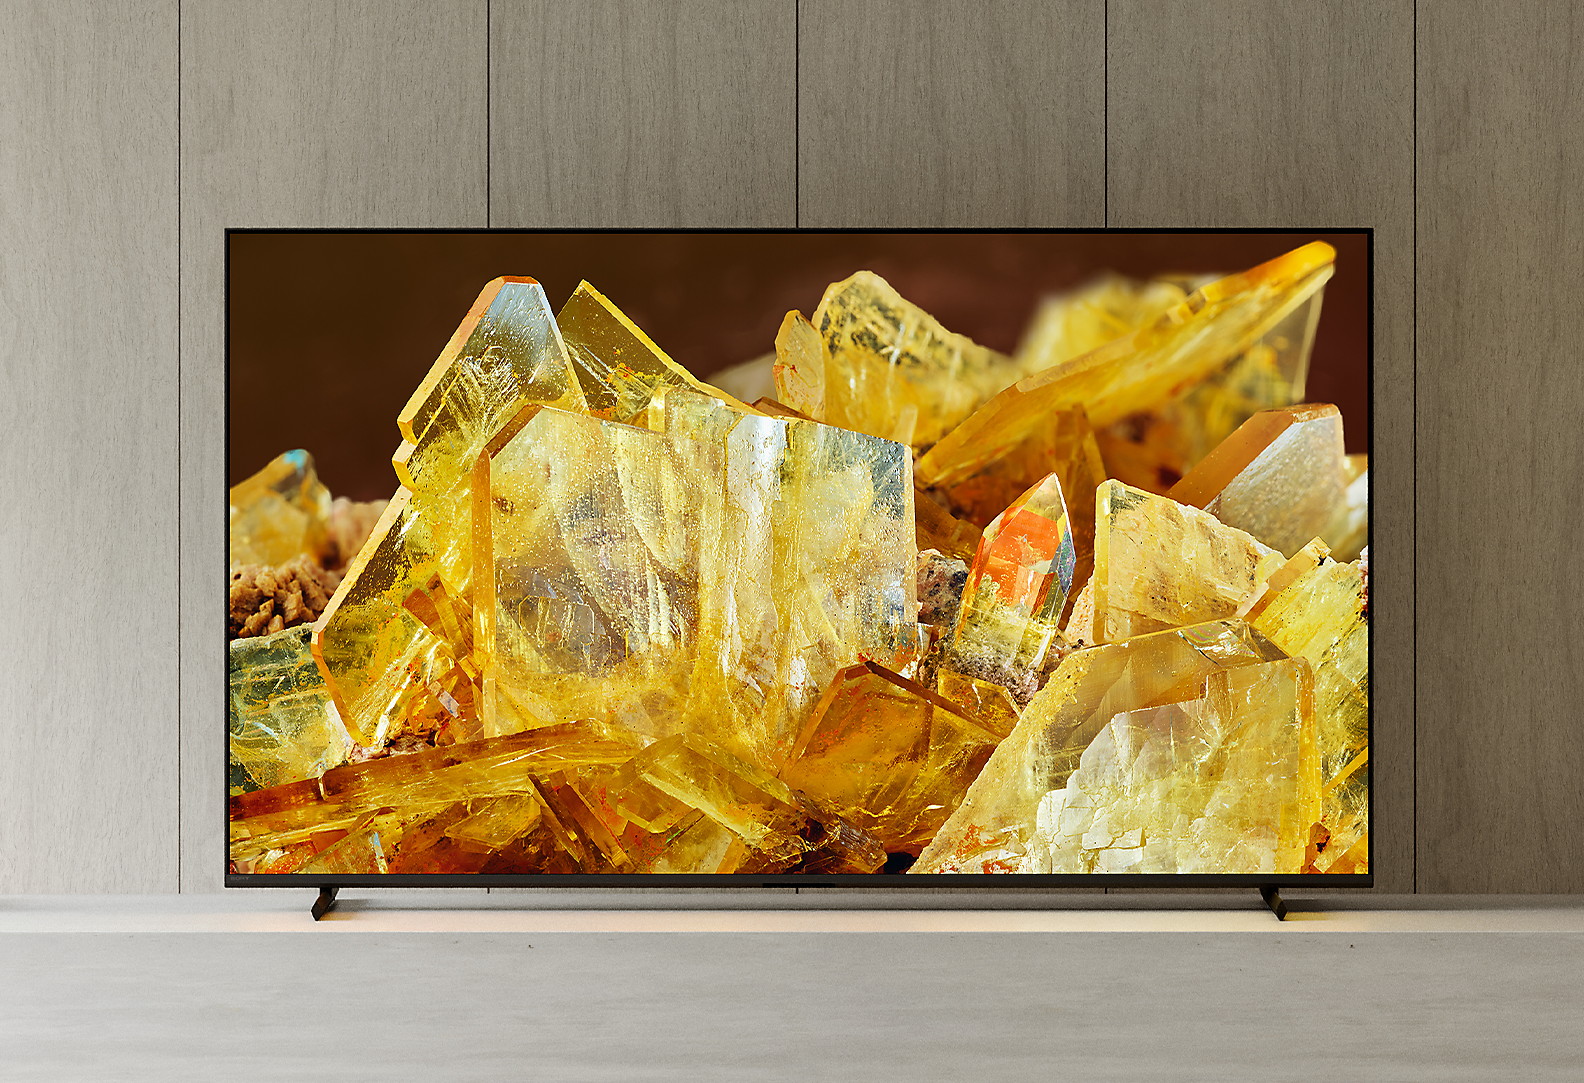 BRAVIA XR TV u dnevnoj sobi, prikazuje izbliza snimljene kristale žute boje